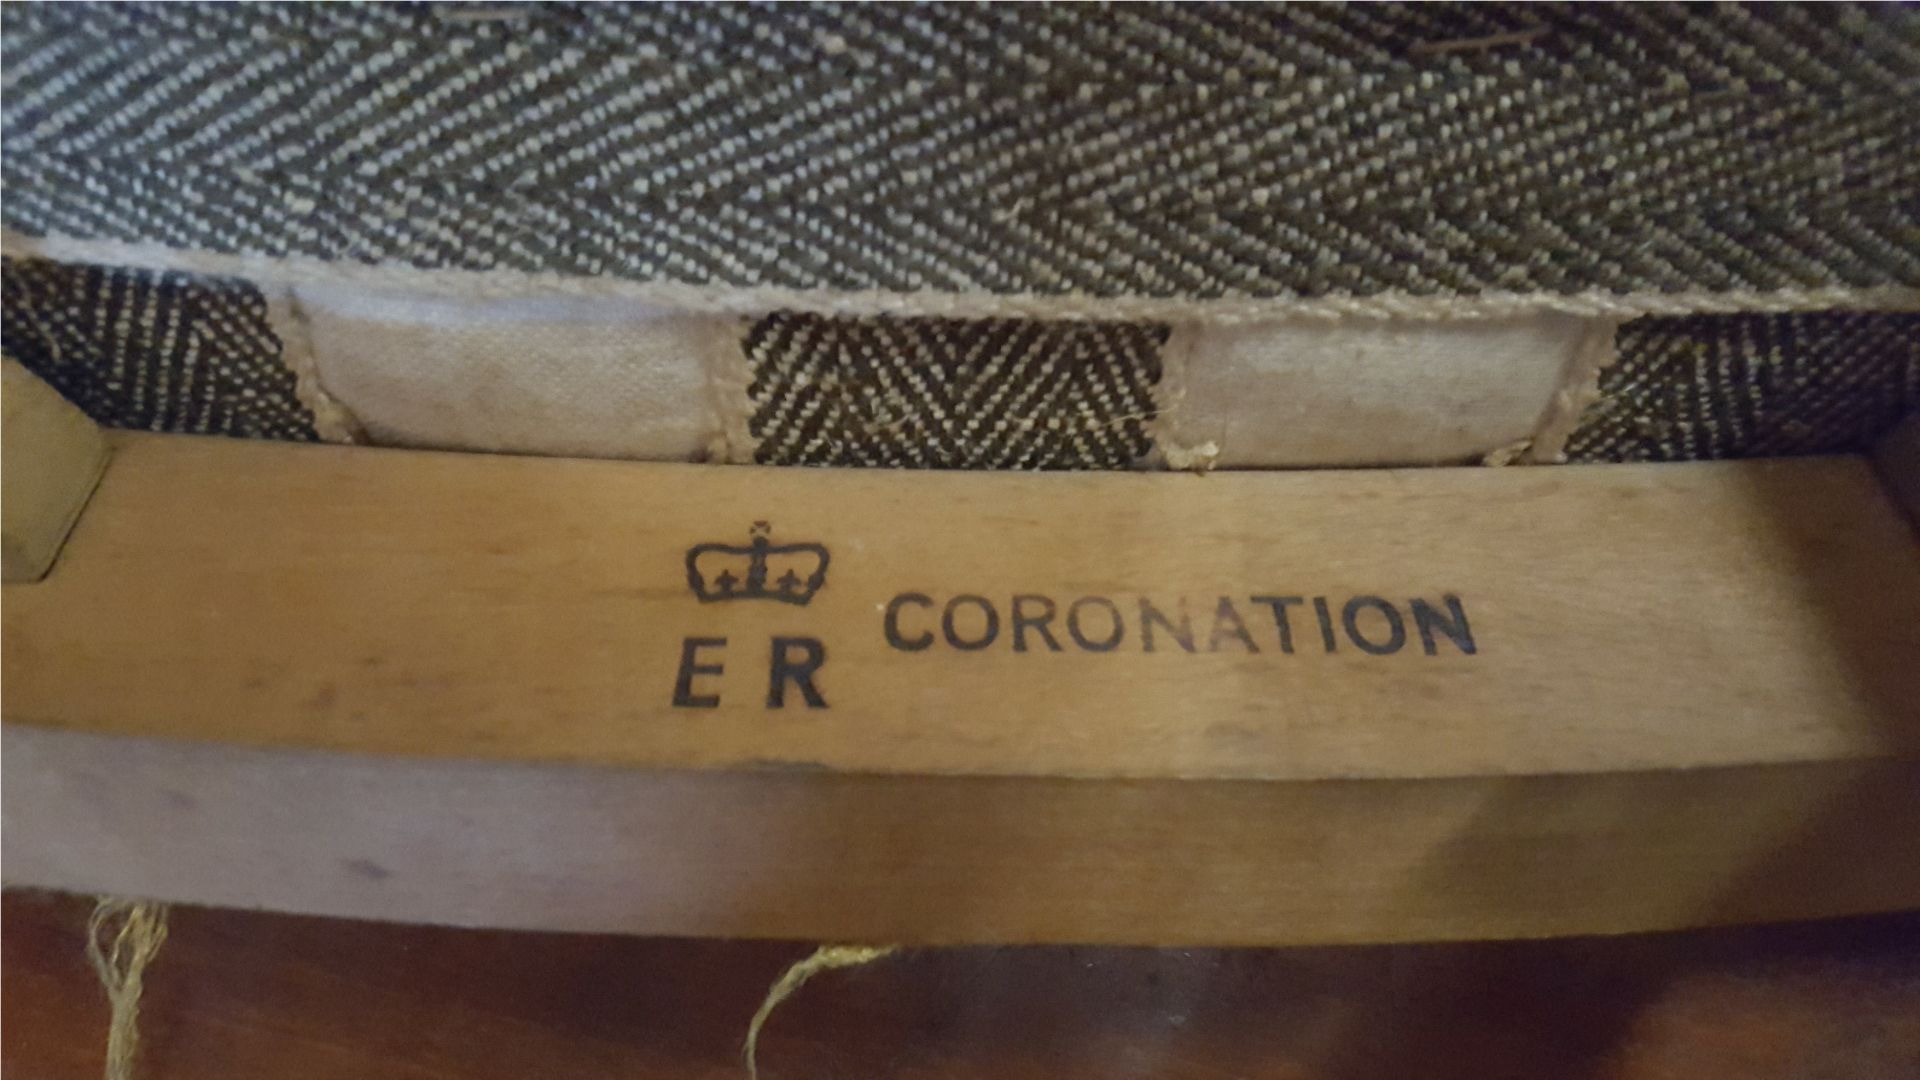 Vintage Queen Elizabeth II Coronation Stool - Image 2 of 2